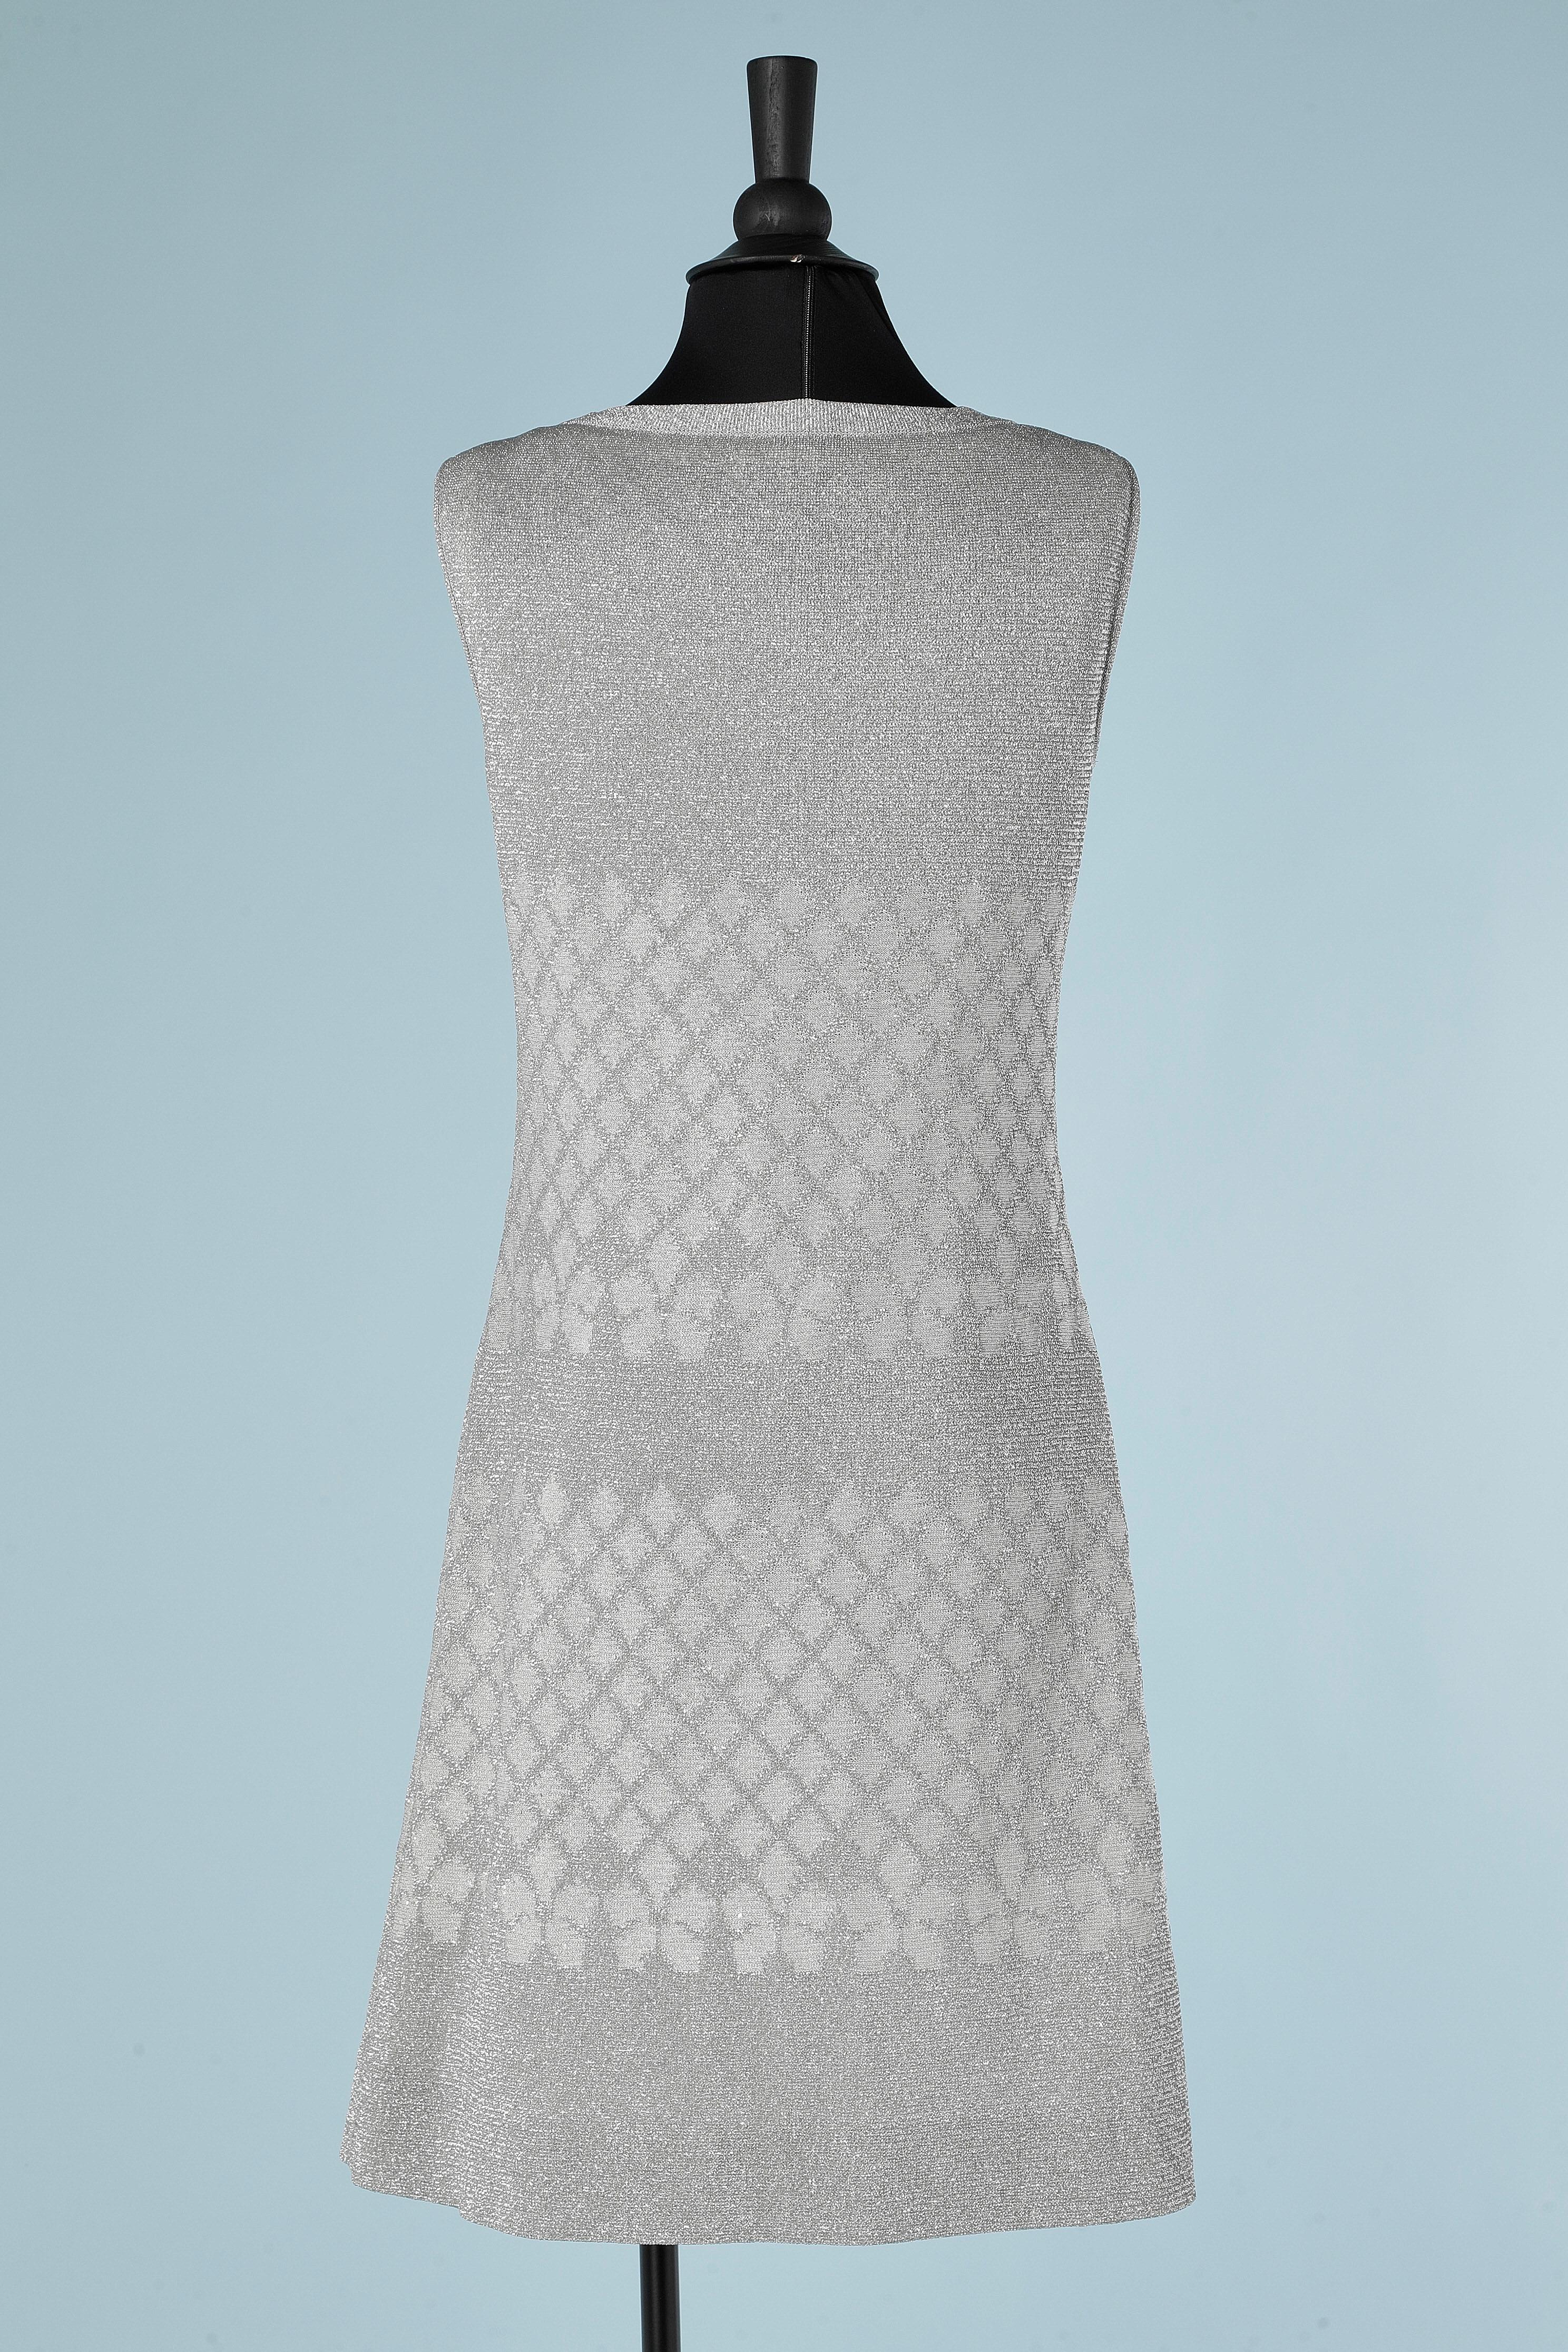 Silver lurex jersey dress with lozenges pattern Pierre Balmain 